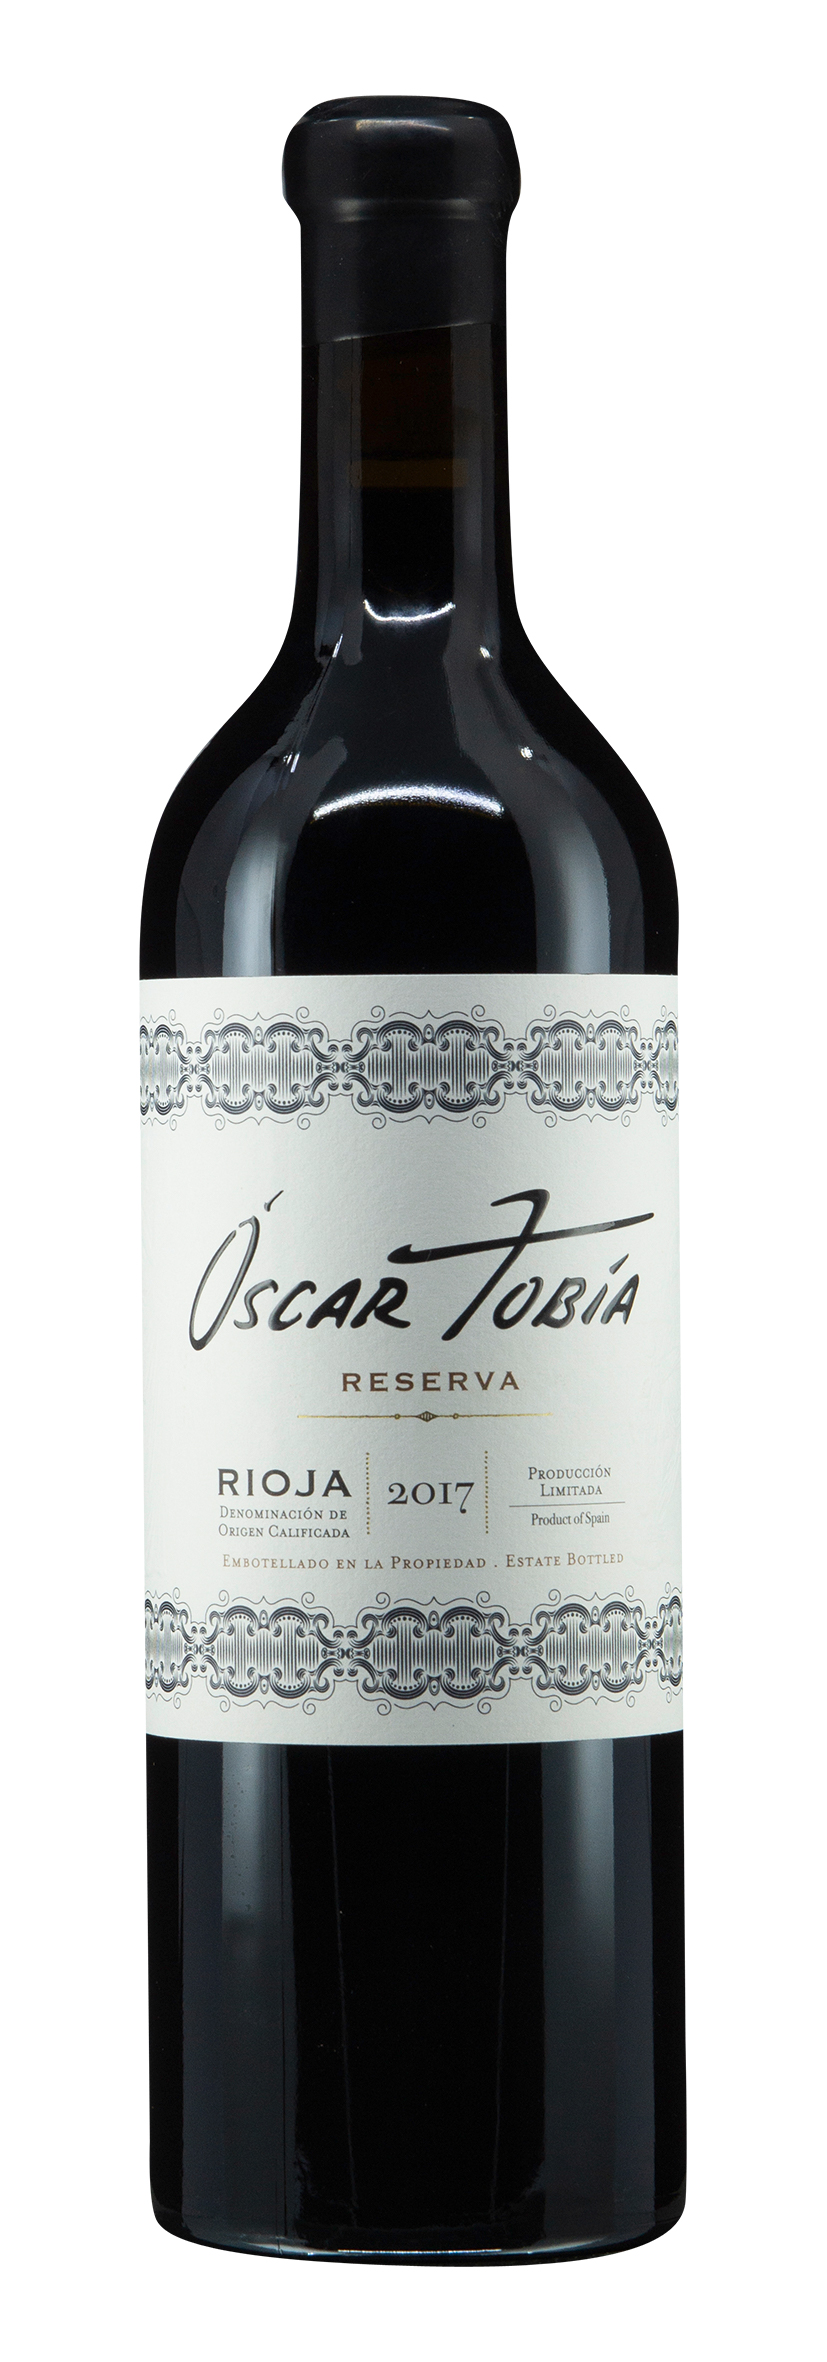 Rioja DOCa Óscar Tobía Reserva 2017